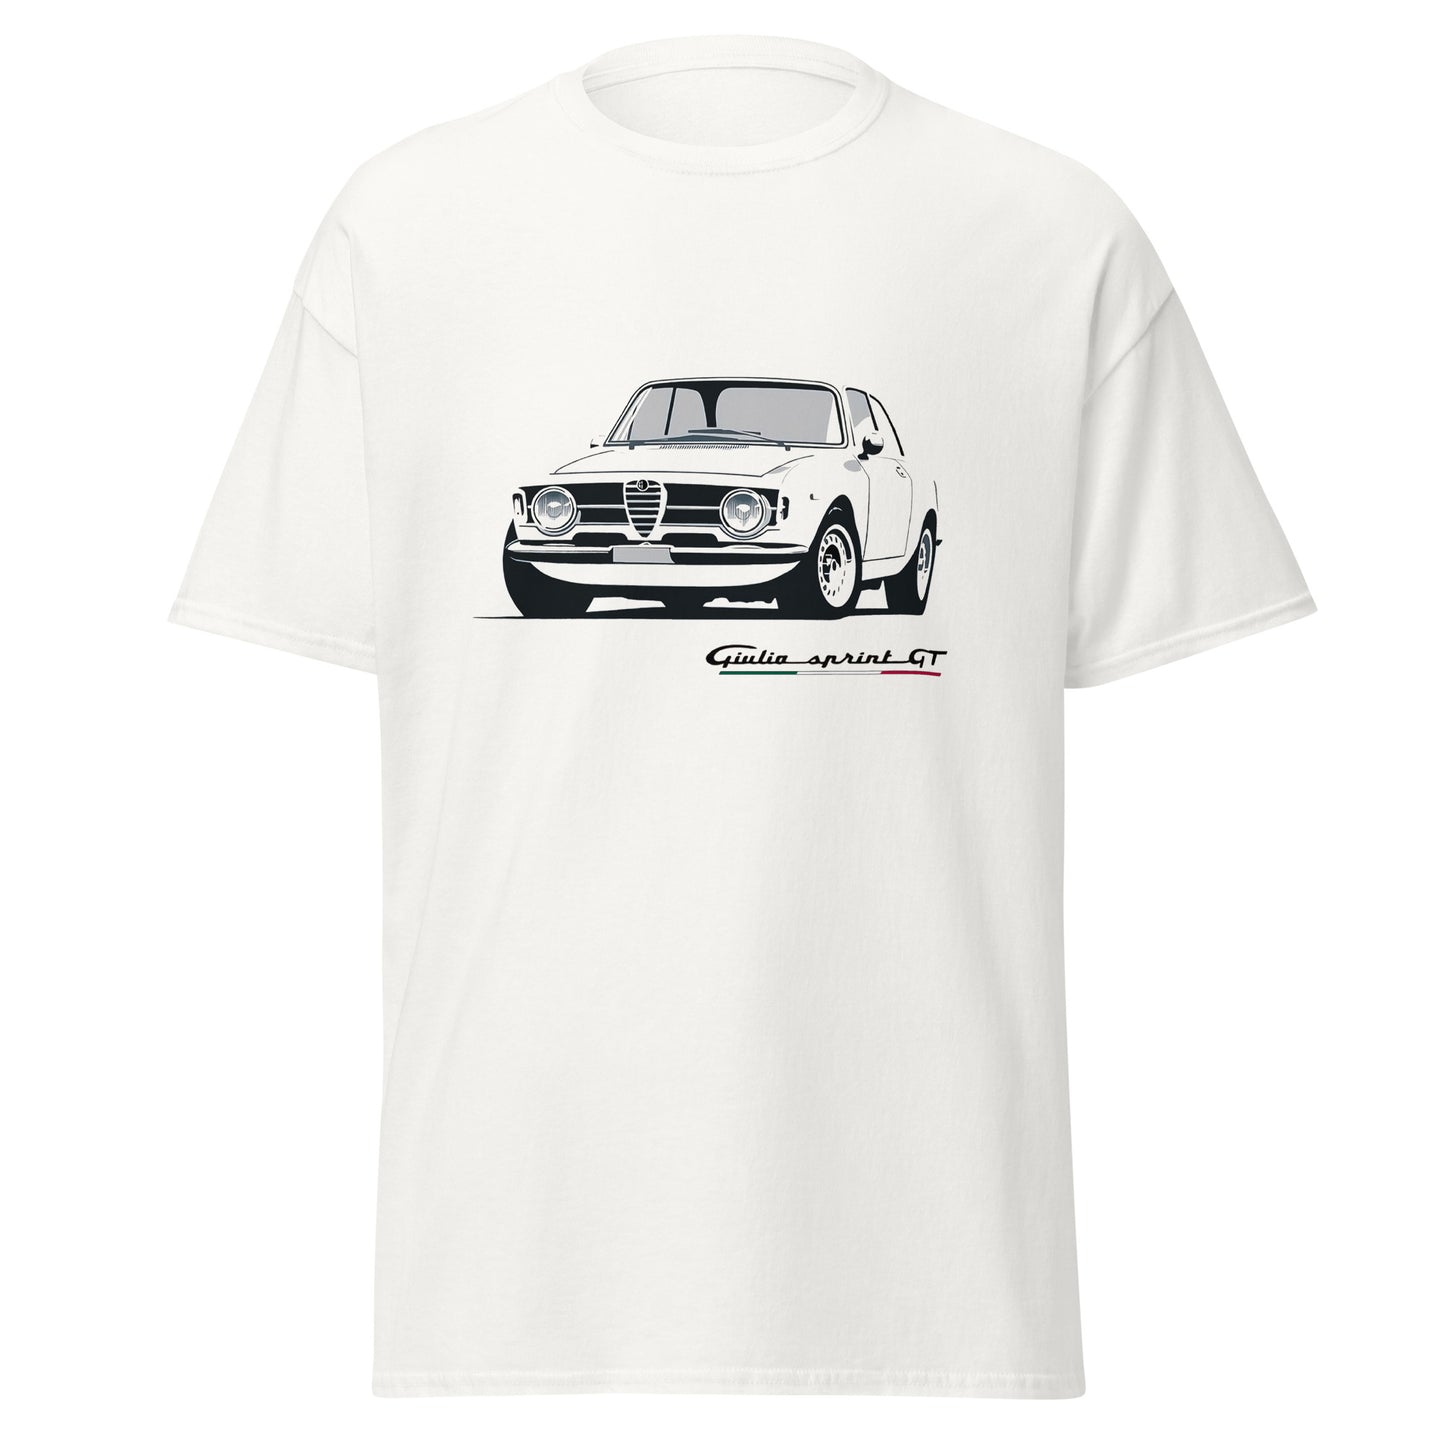 T-shirt Alfa Romeo Giulia Sprint Gt